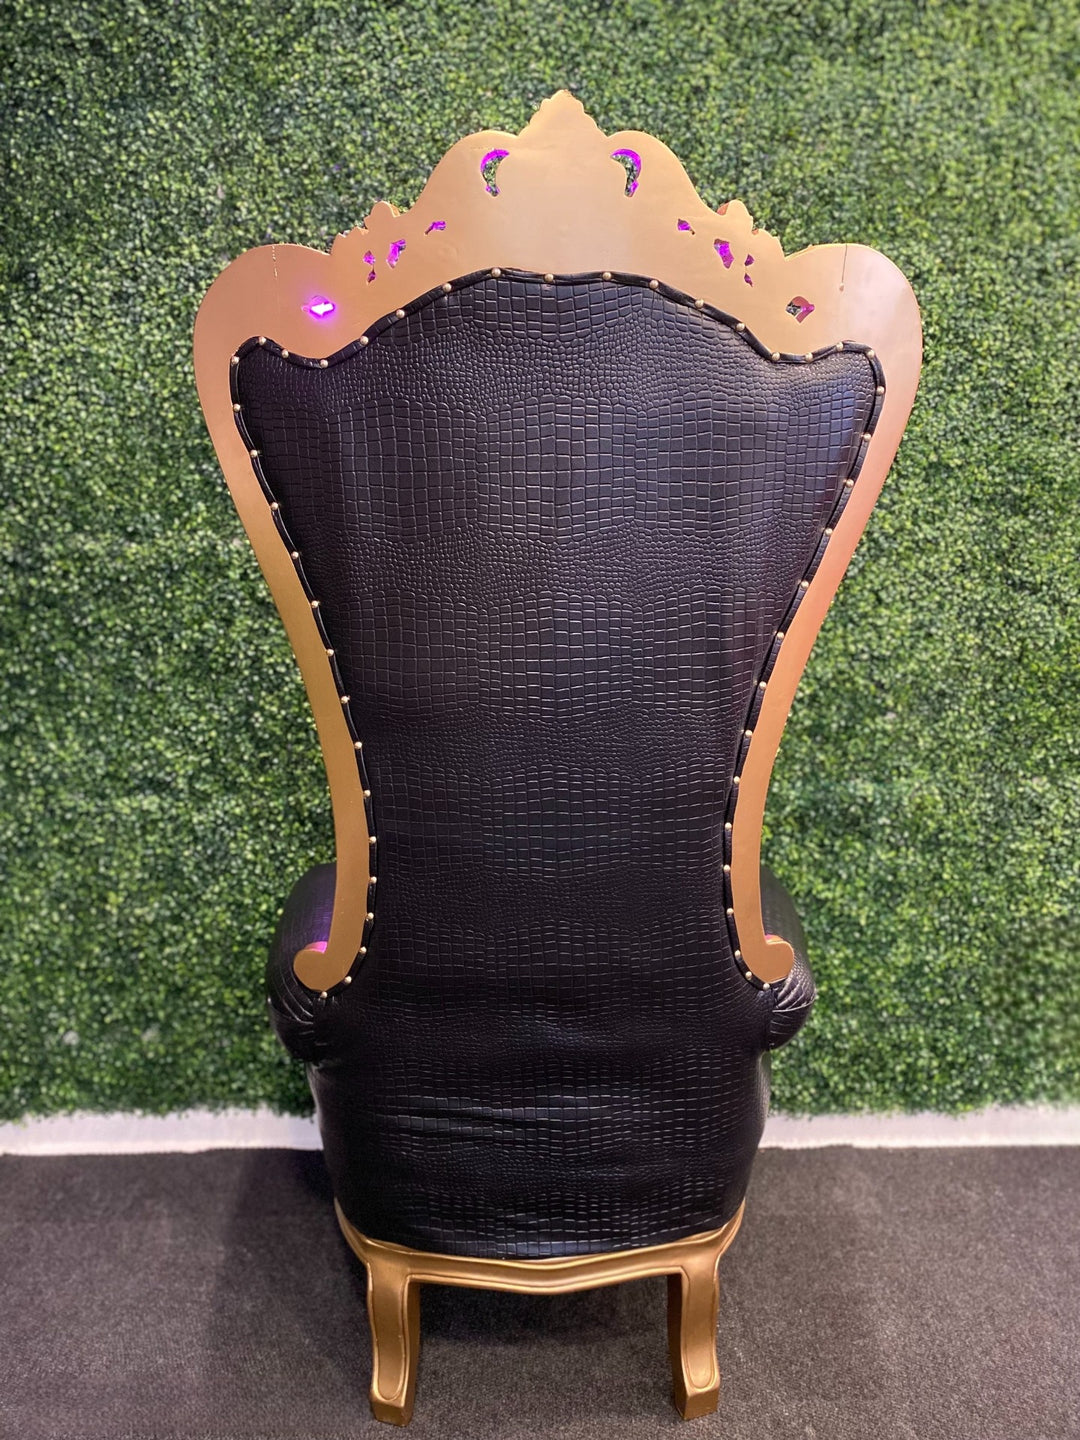 Queen Throne Chair Gold/Black